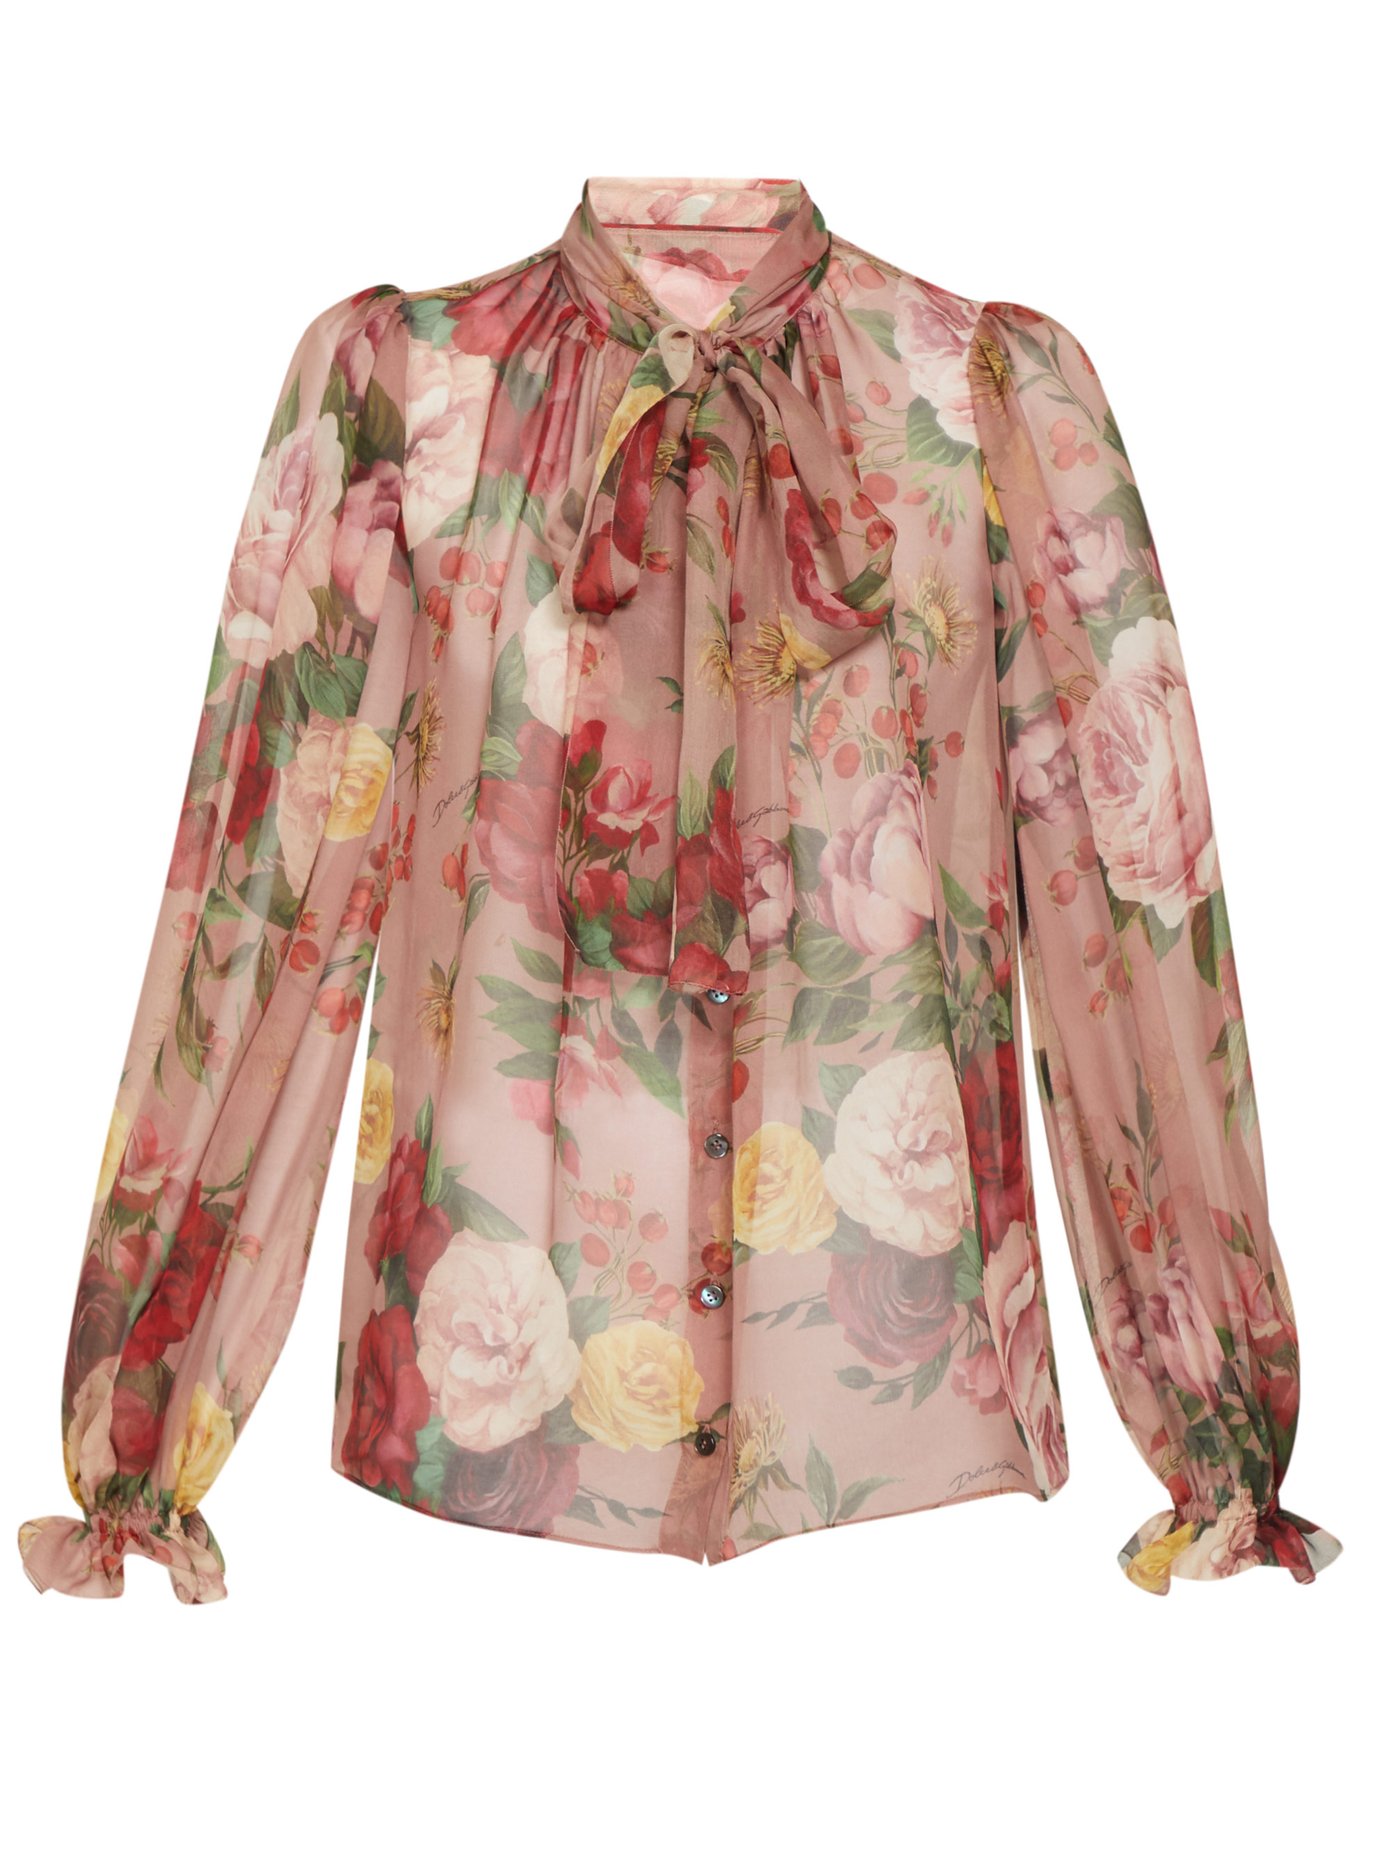 dolce and gabbana floral shirt